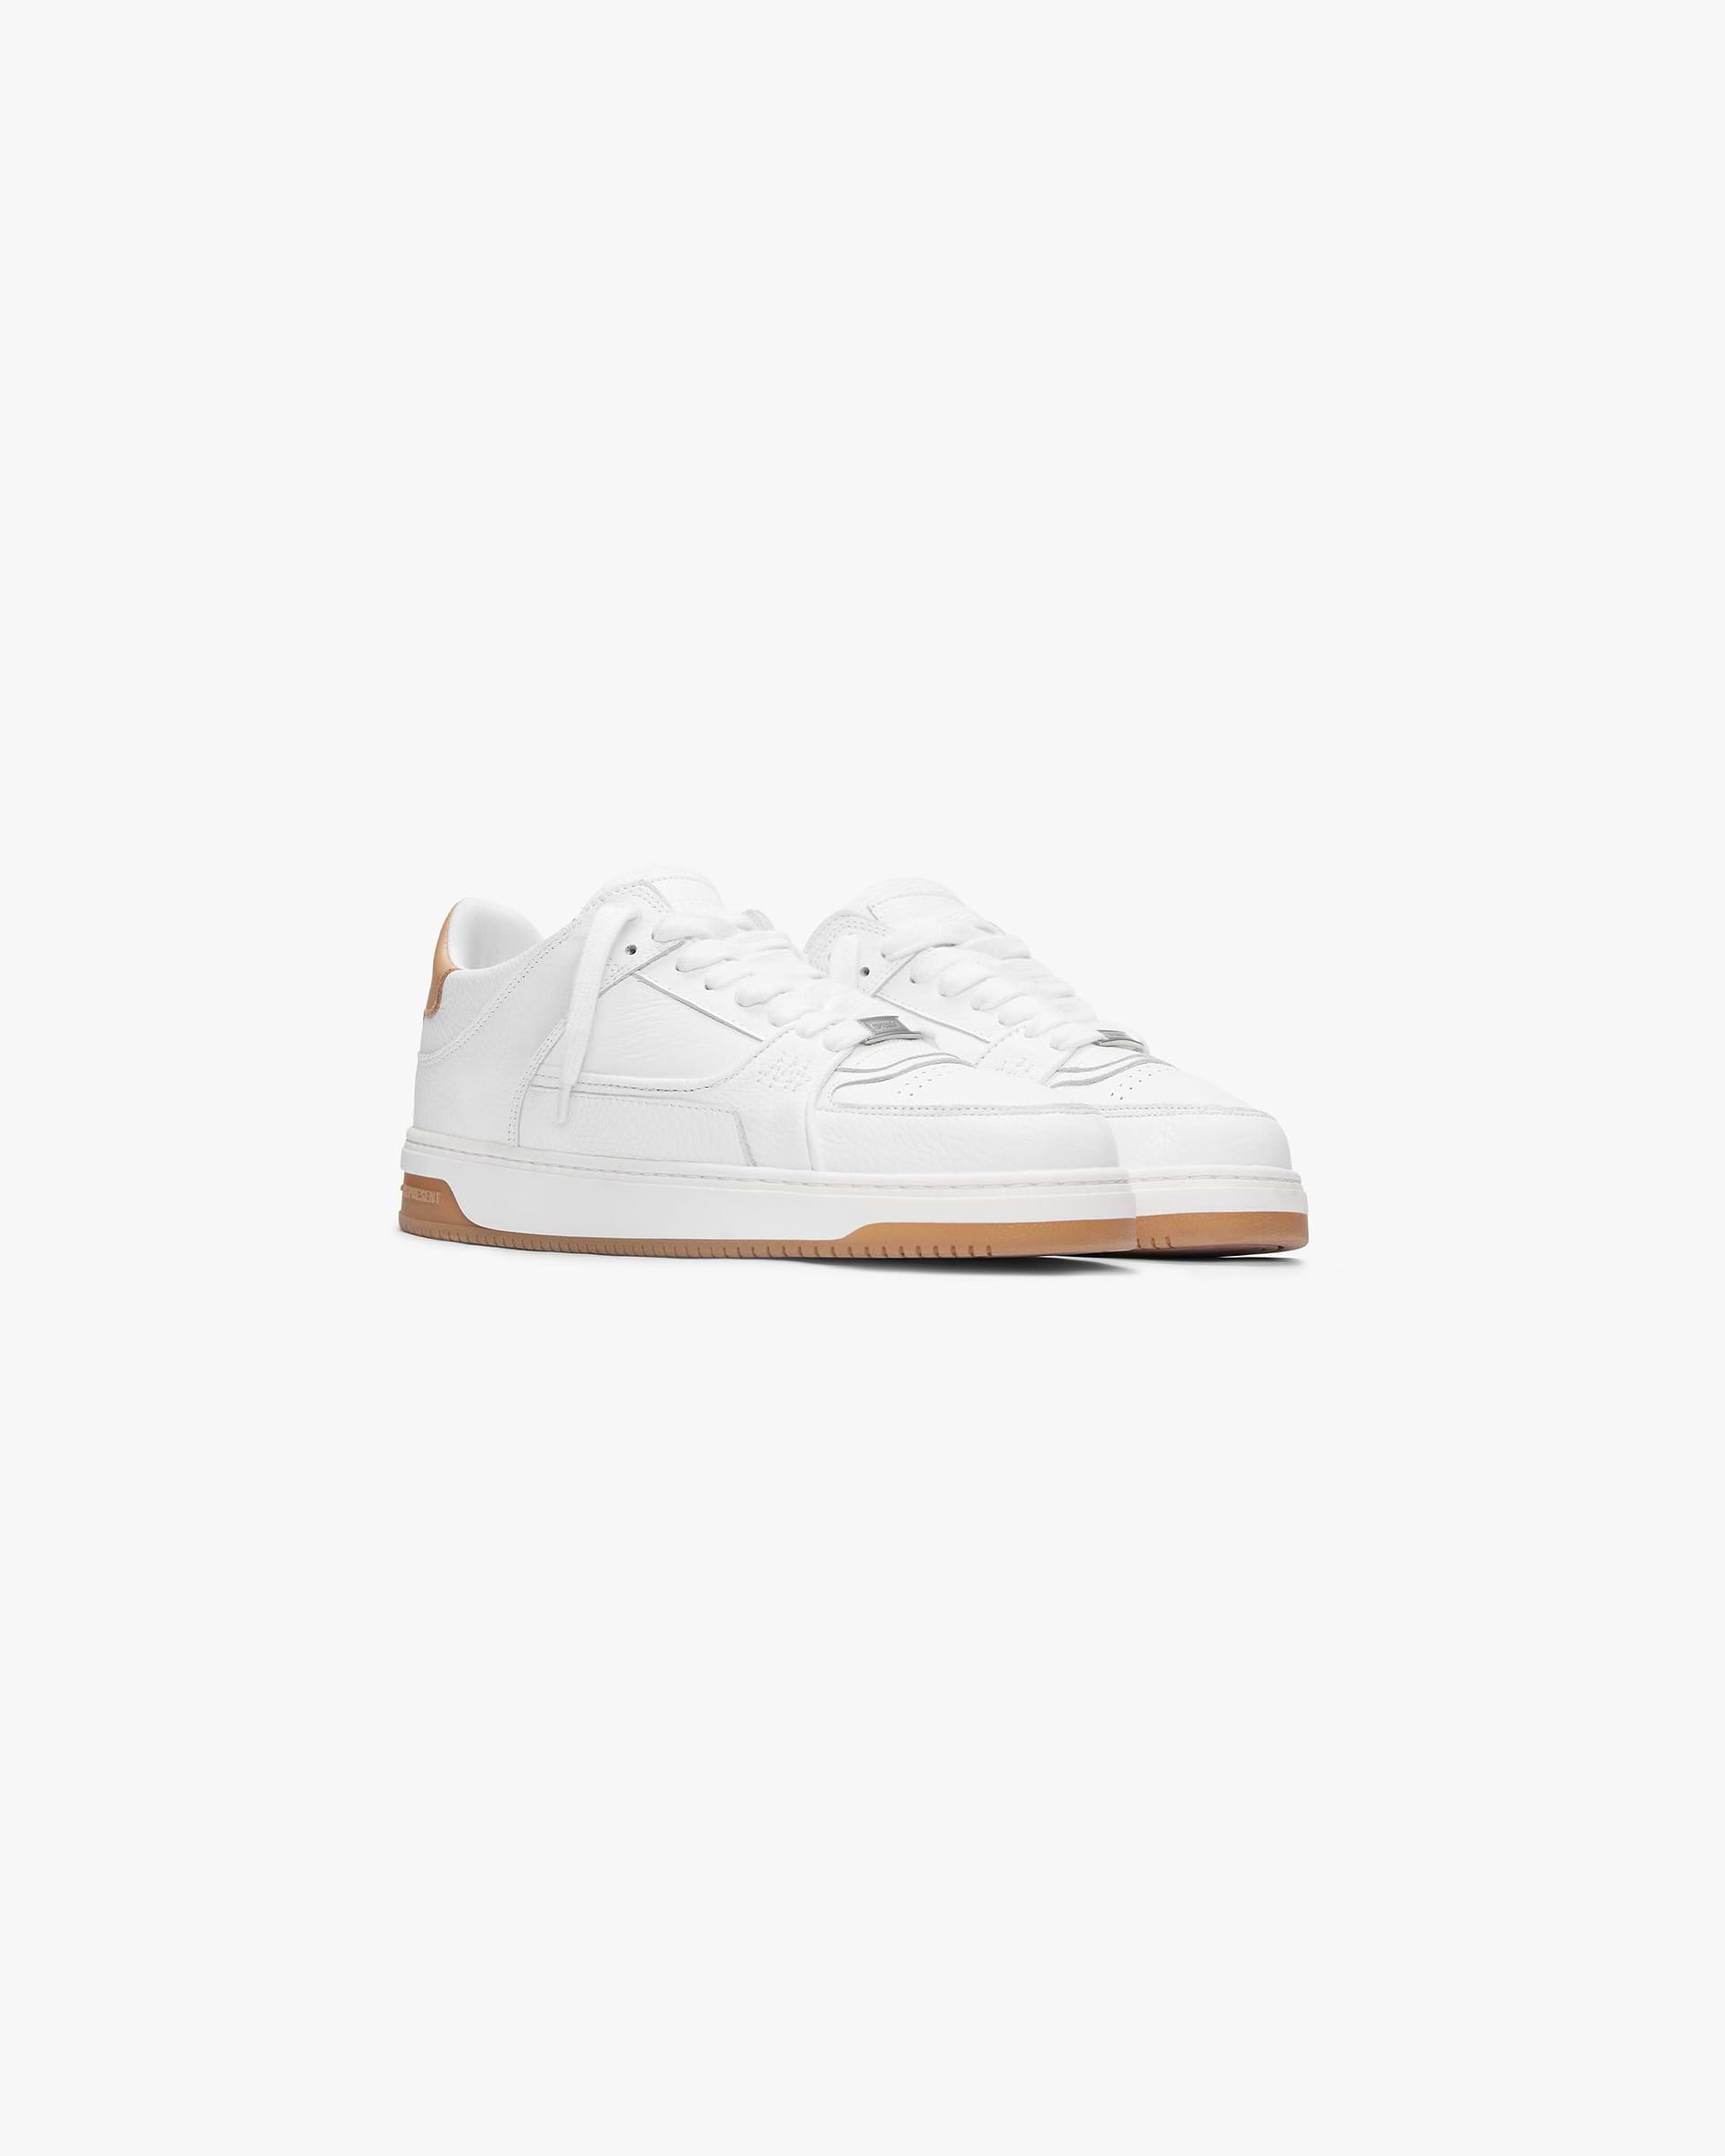 Apex | Flat White Gum Footwear SC23 | Represent Clo